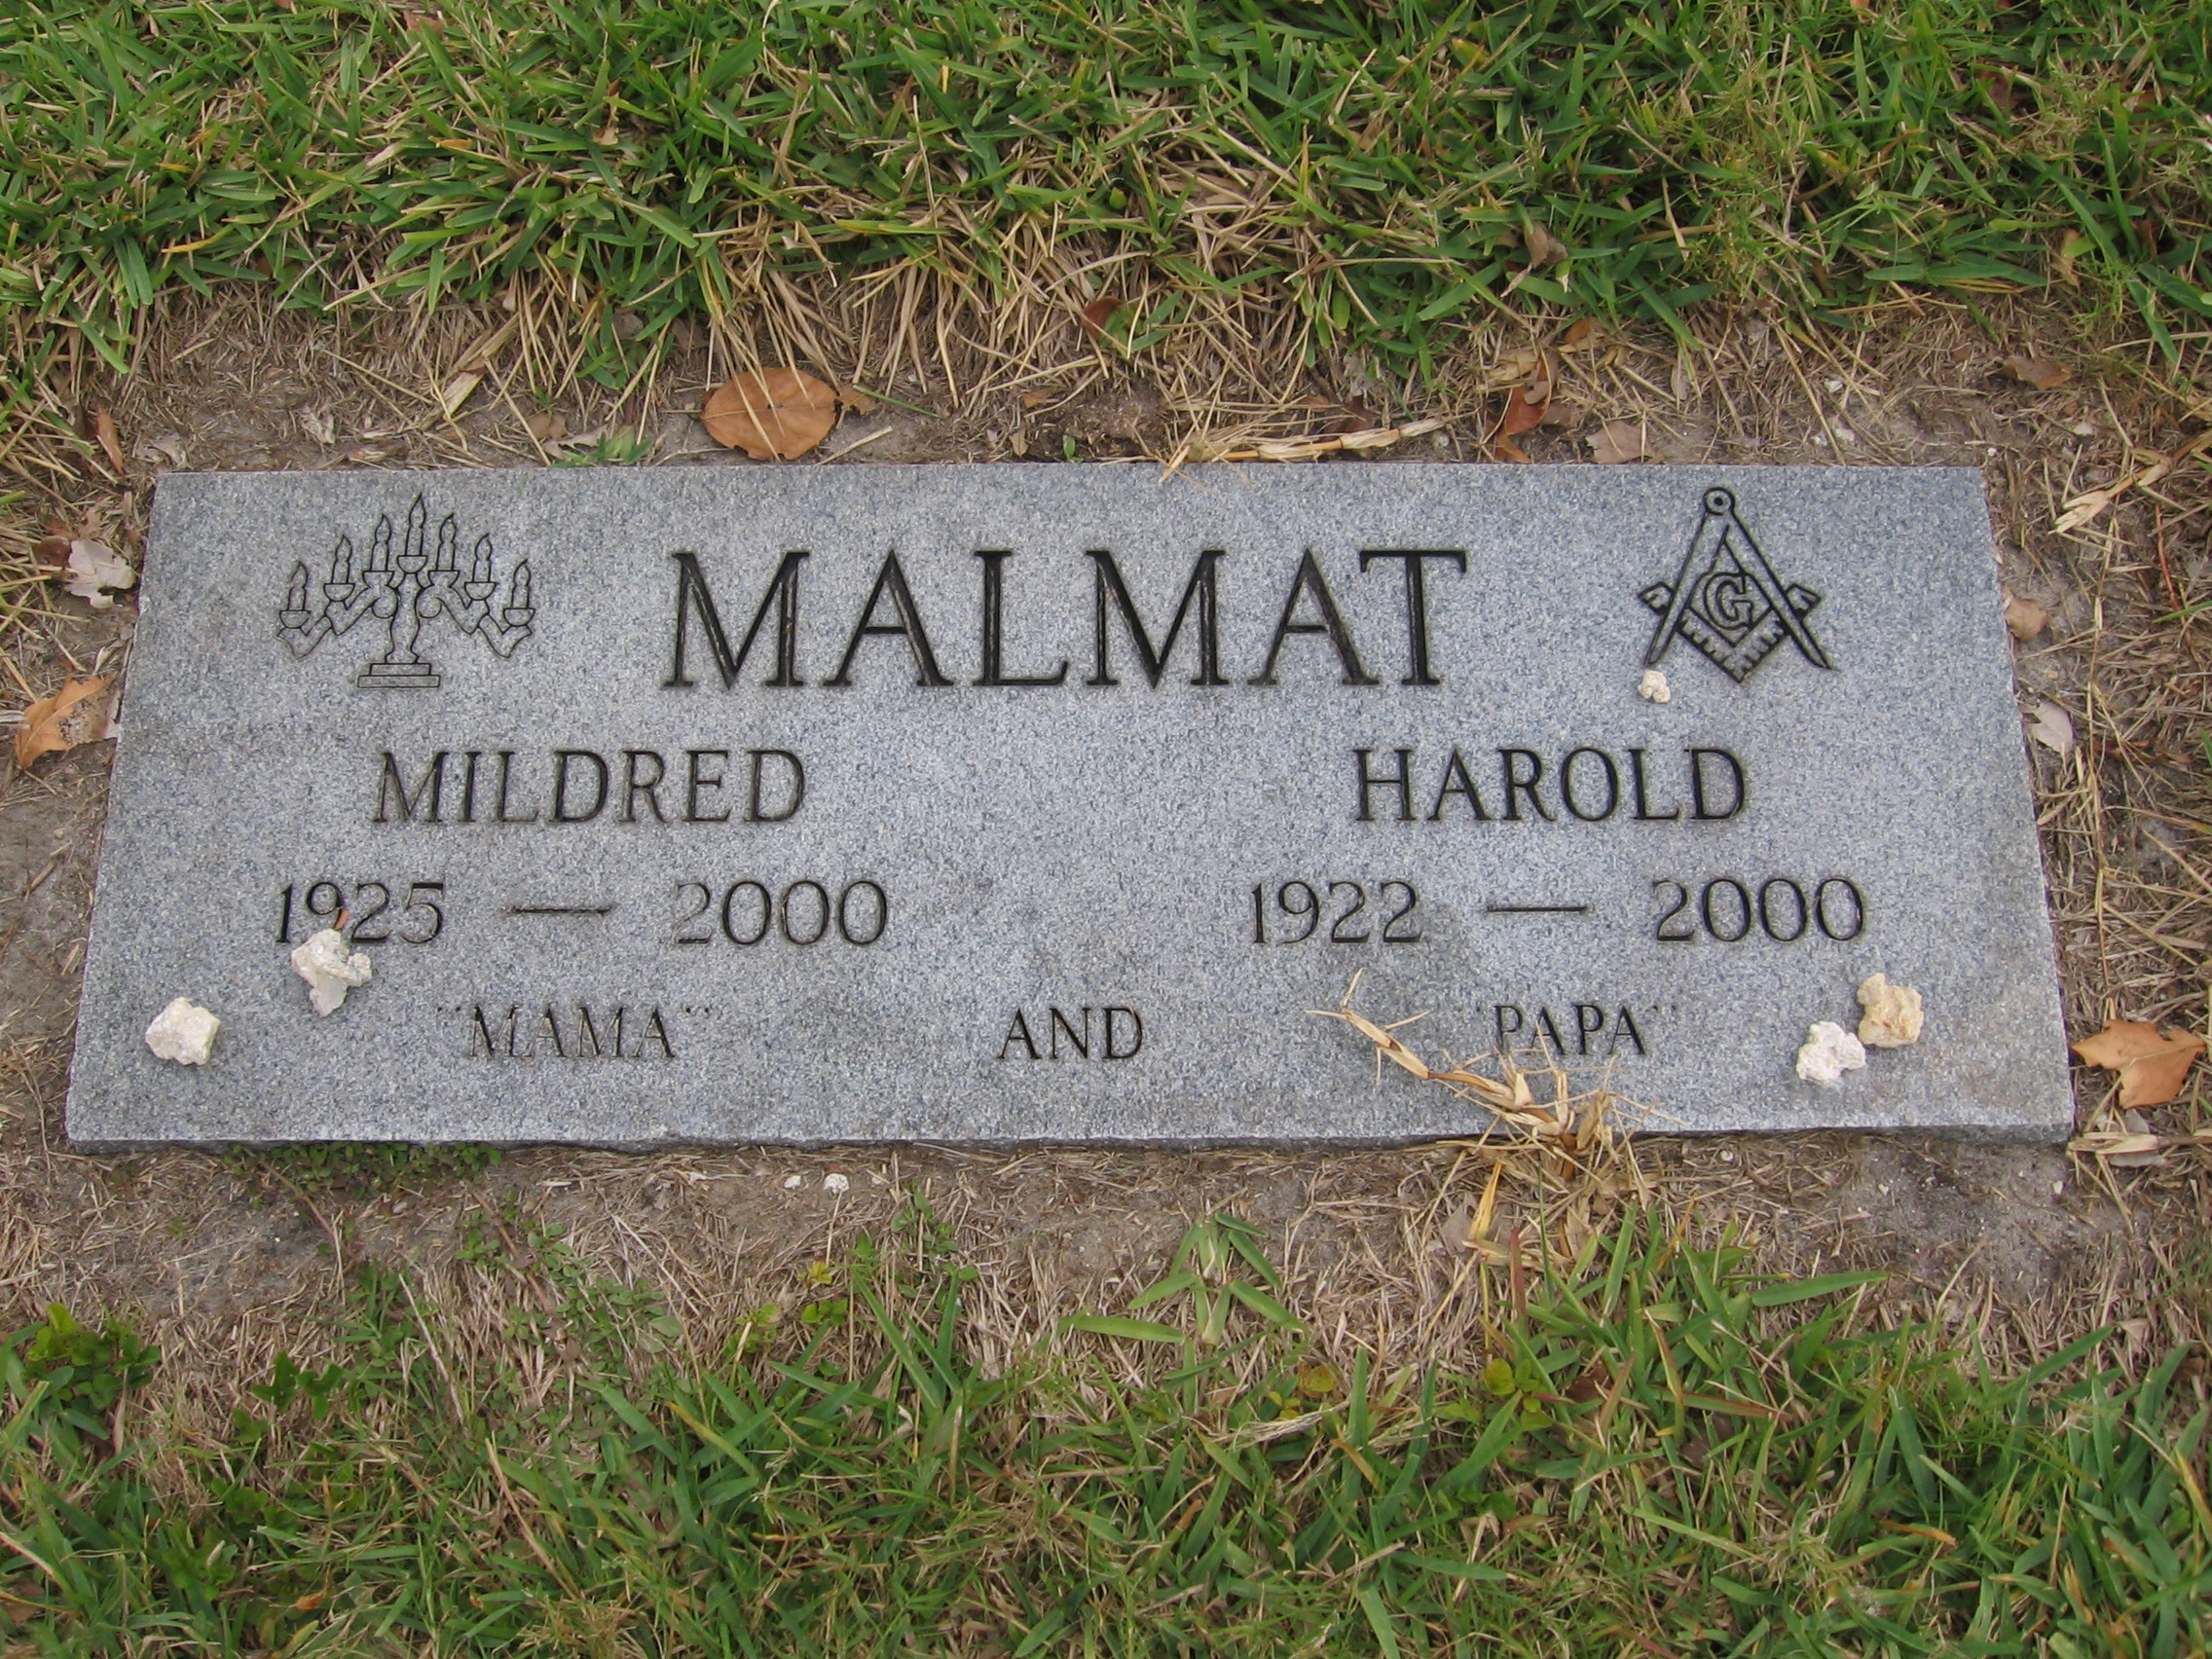 Mildred Malmat